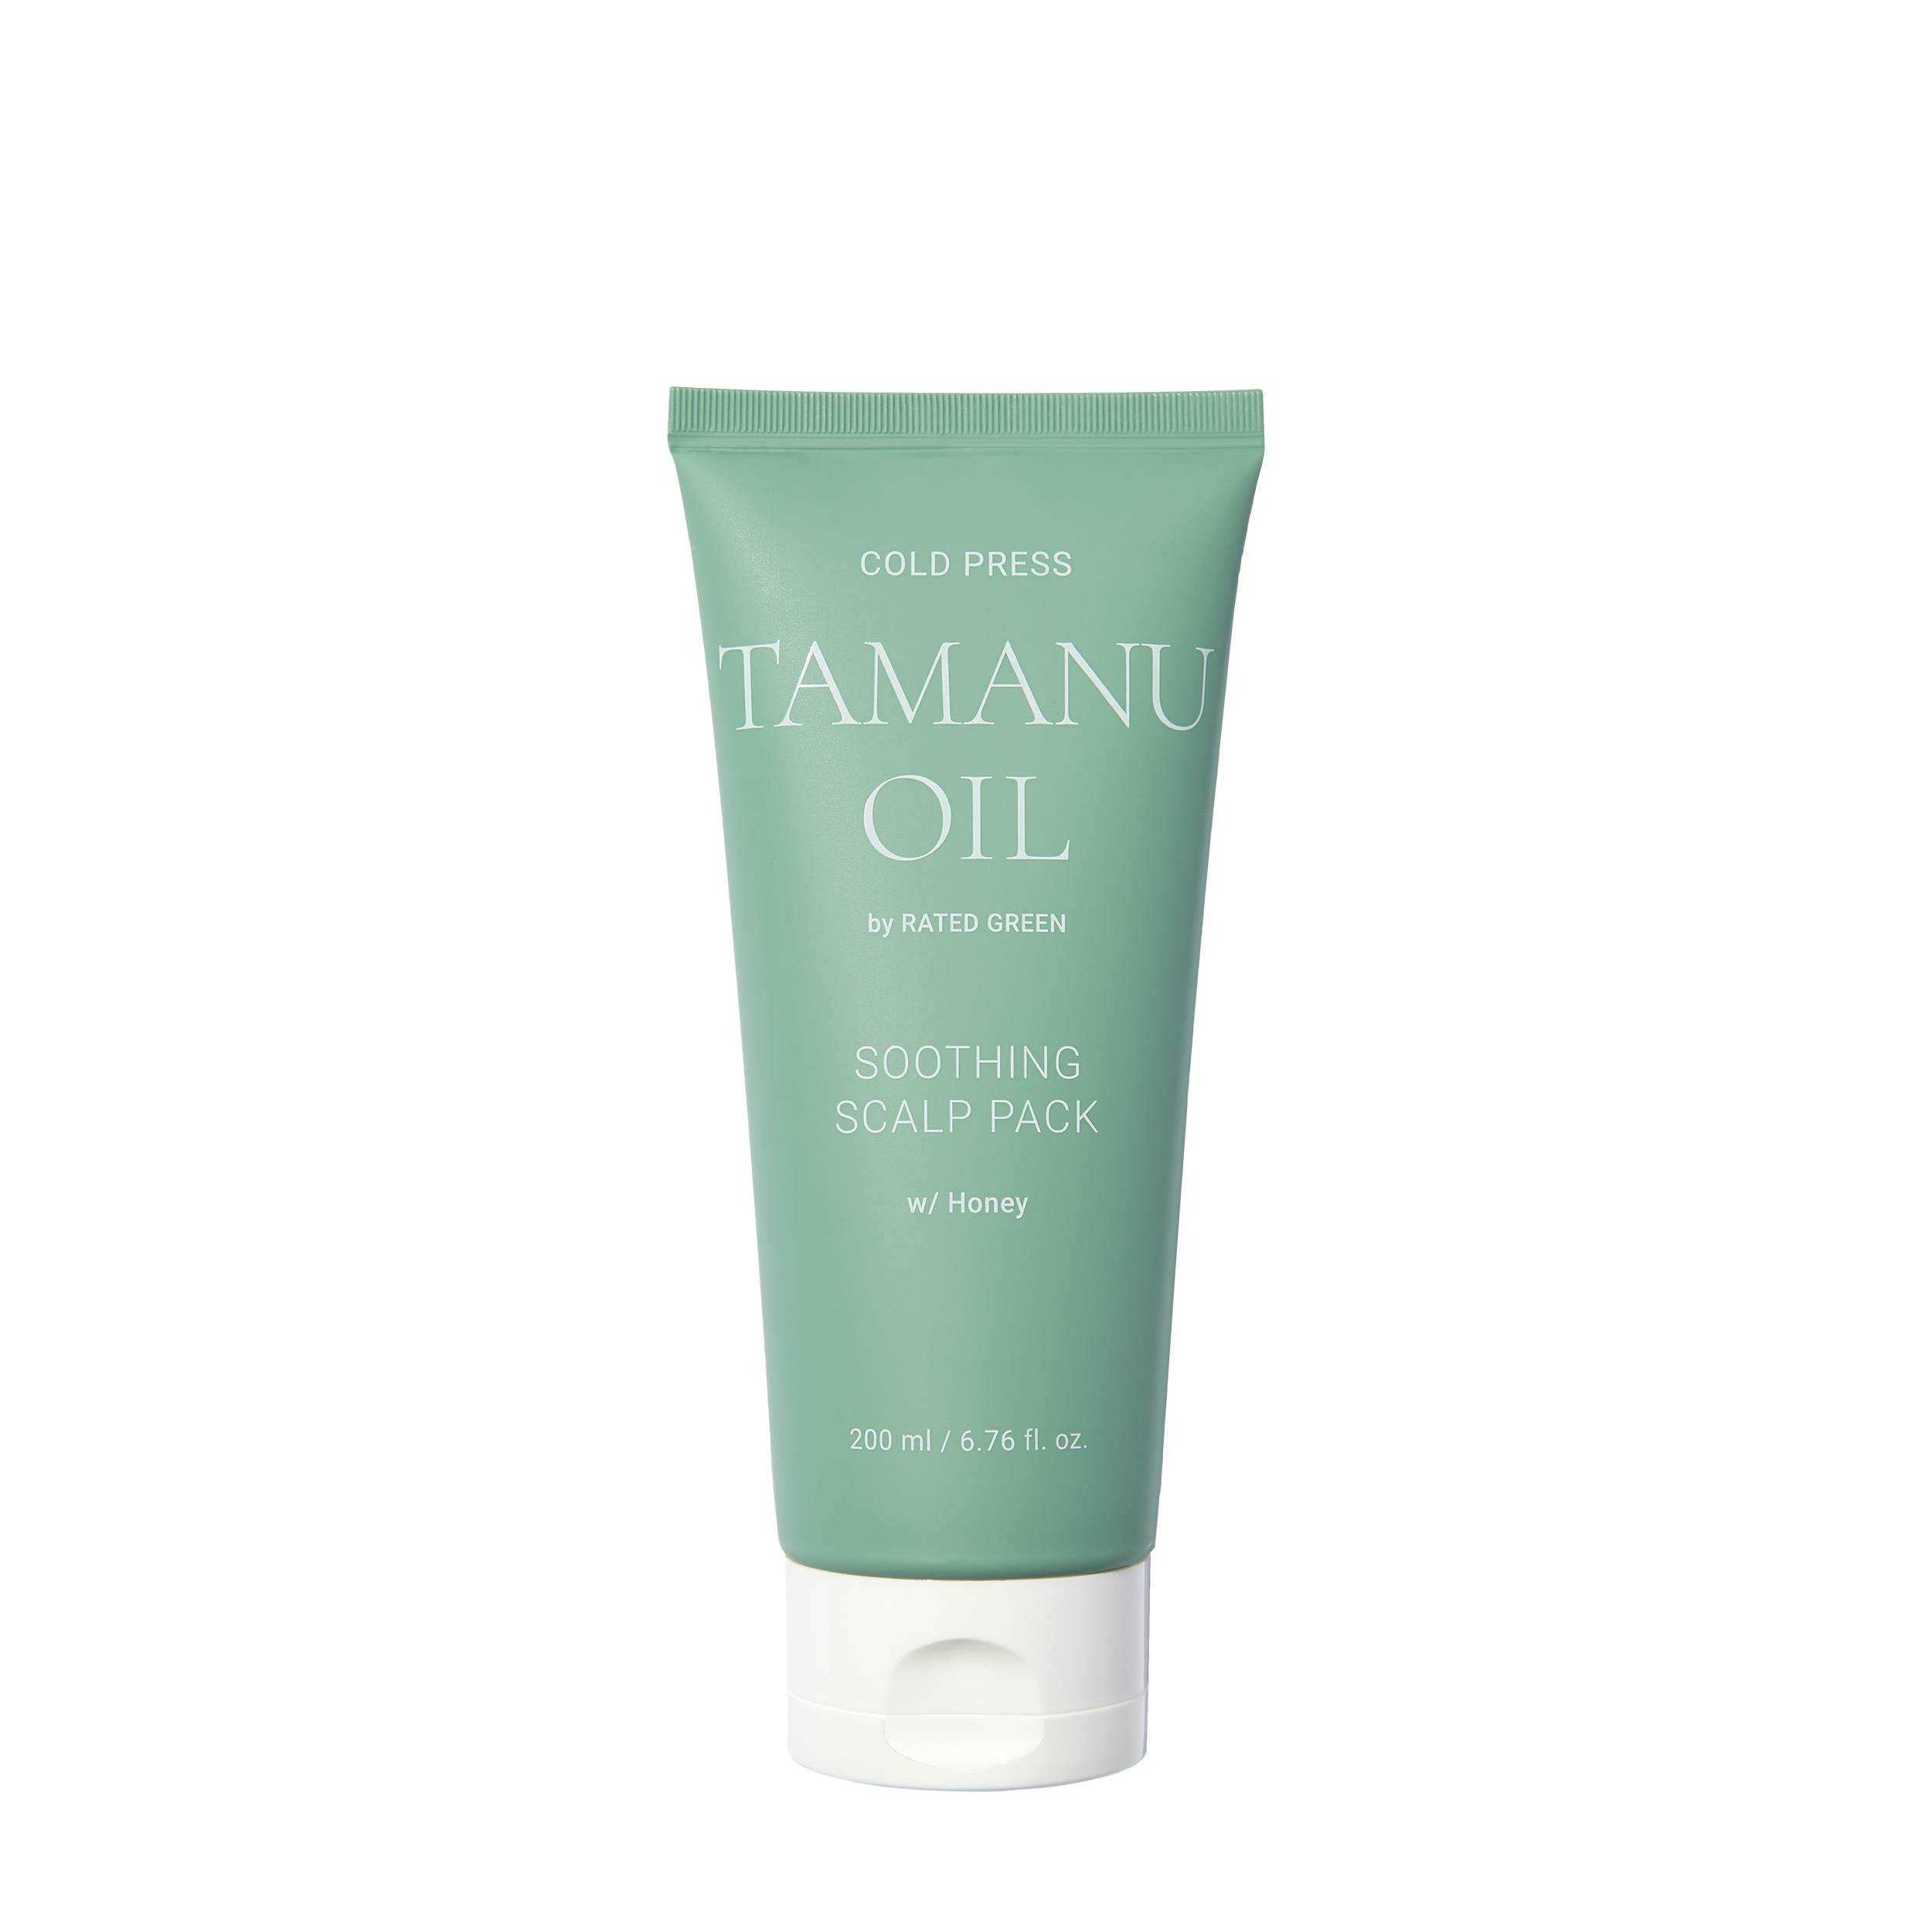 Rated Green Успокаивающая маска для кожи головы
Tamanu Oil Soothing Scalp Pack